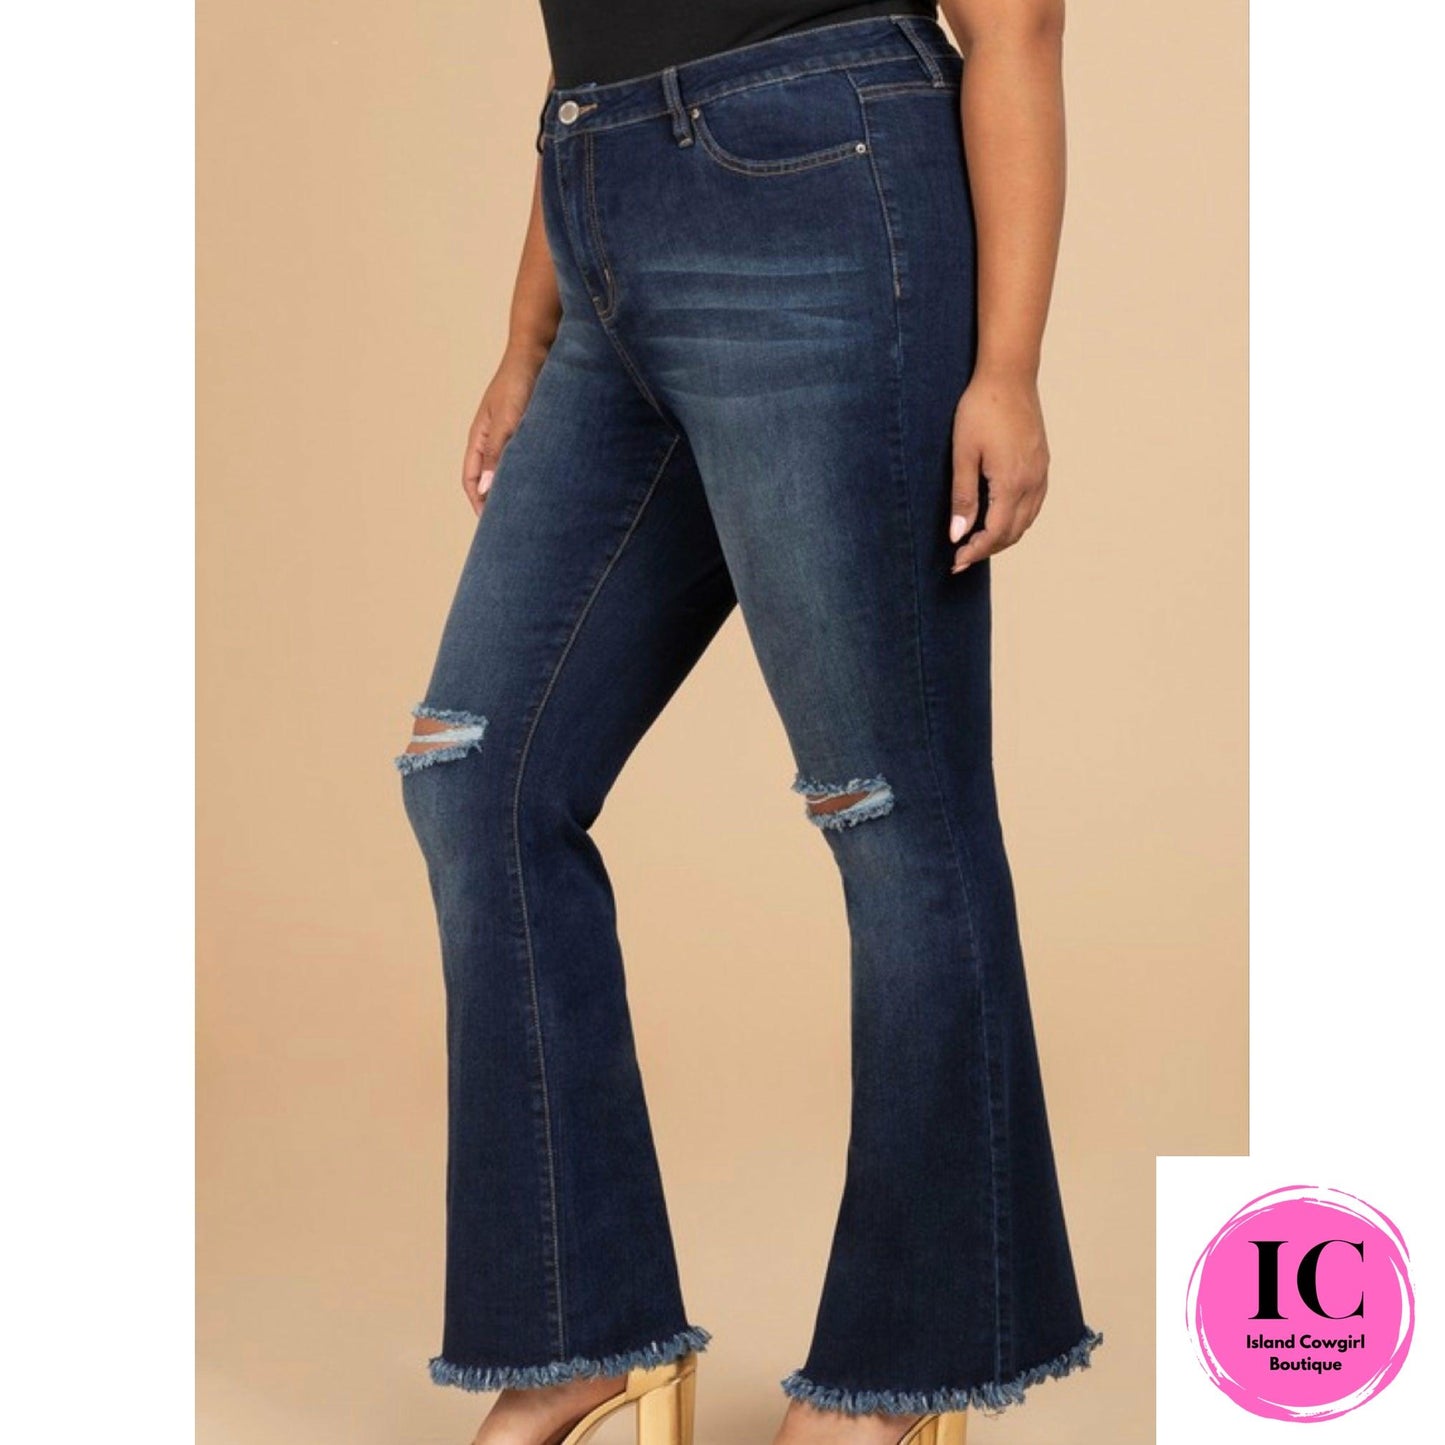 Curvy girl jeans. plus size trendy jeans. YMI women's plus size jeans